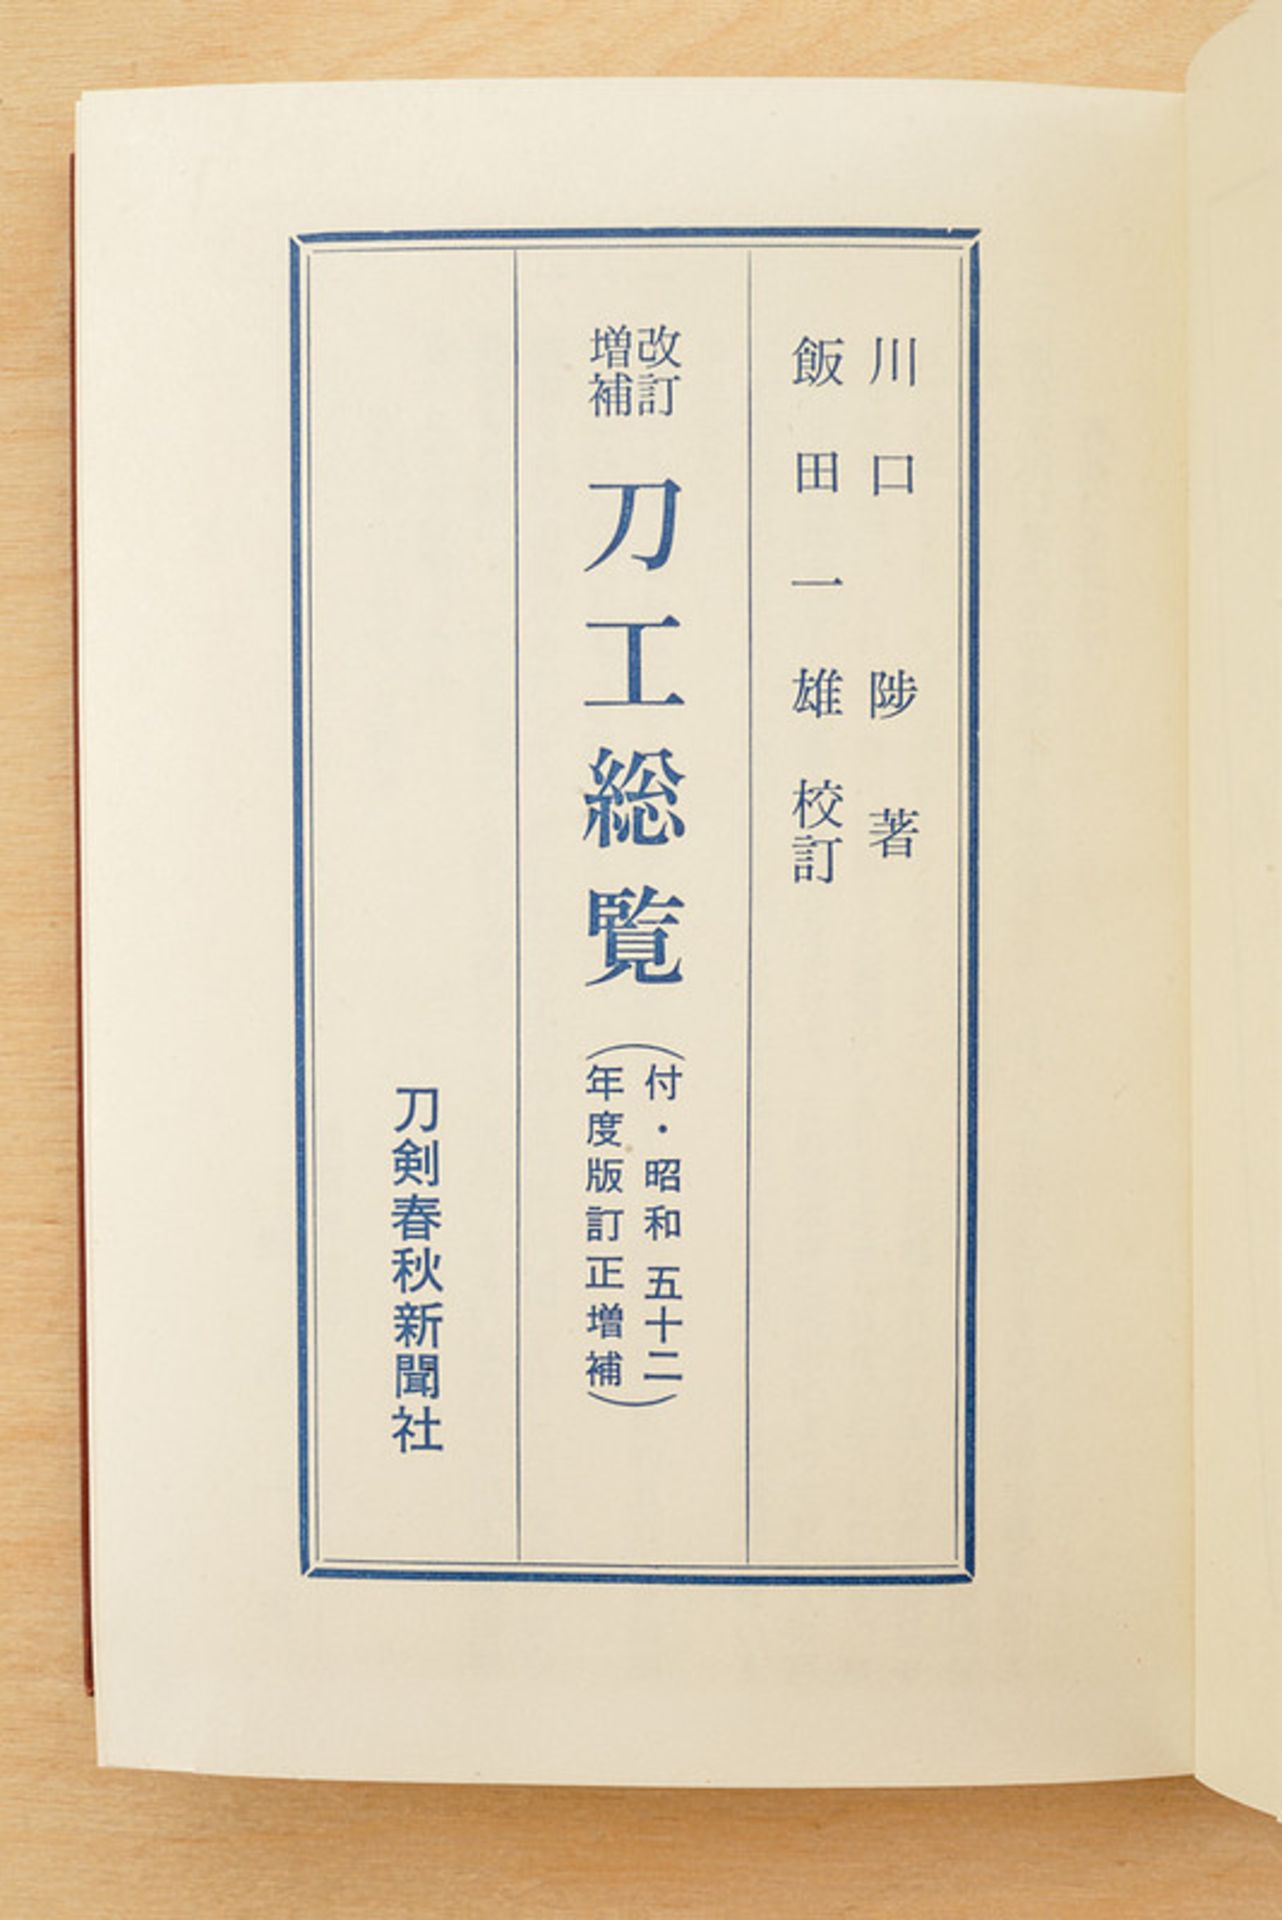 Kawaguchi dating: 20th Century provenance: Japan "Kenko Sogan" (General Survey about Sword - Image 4 of 4